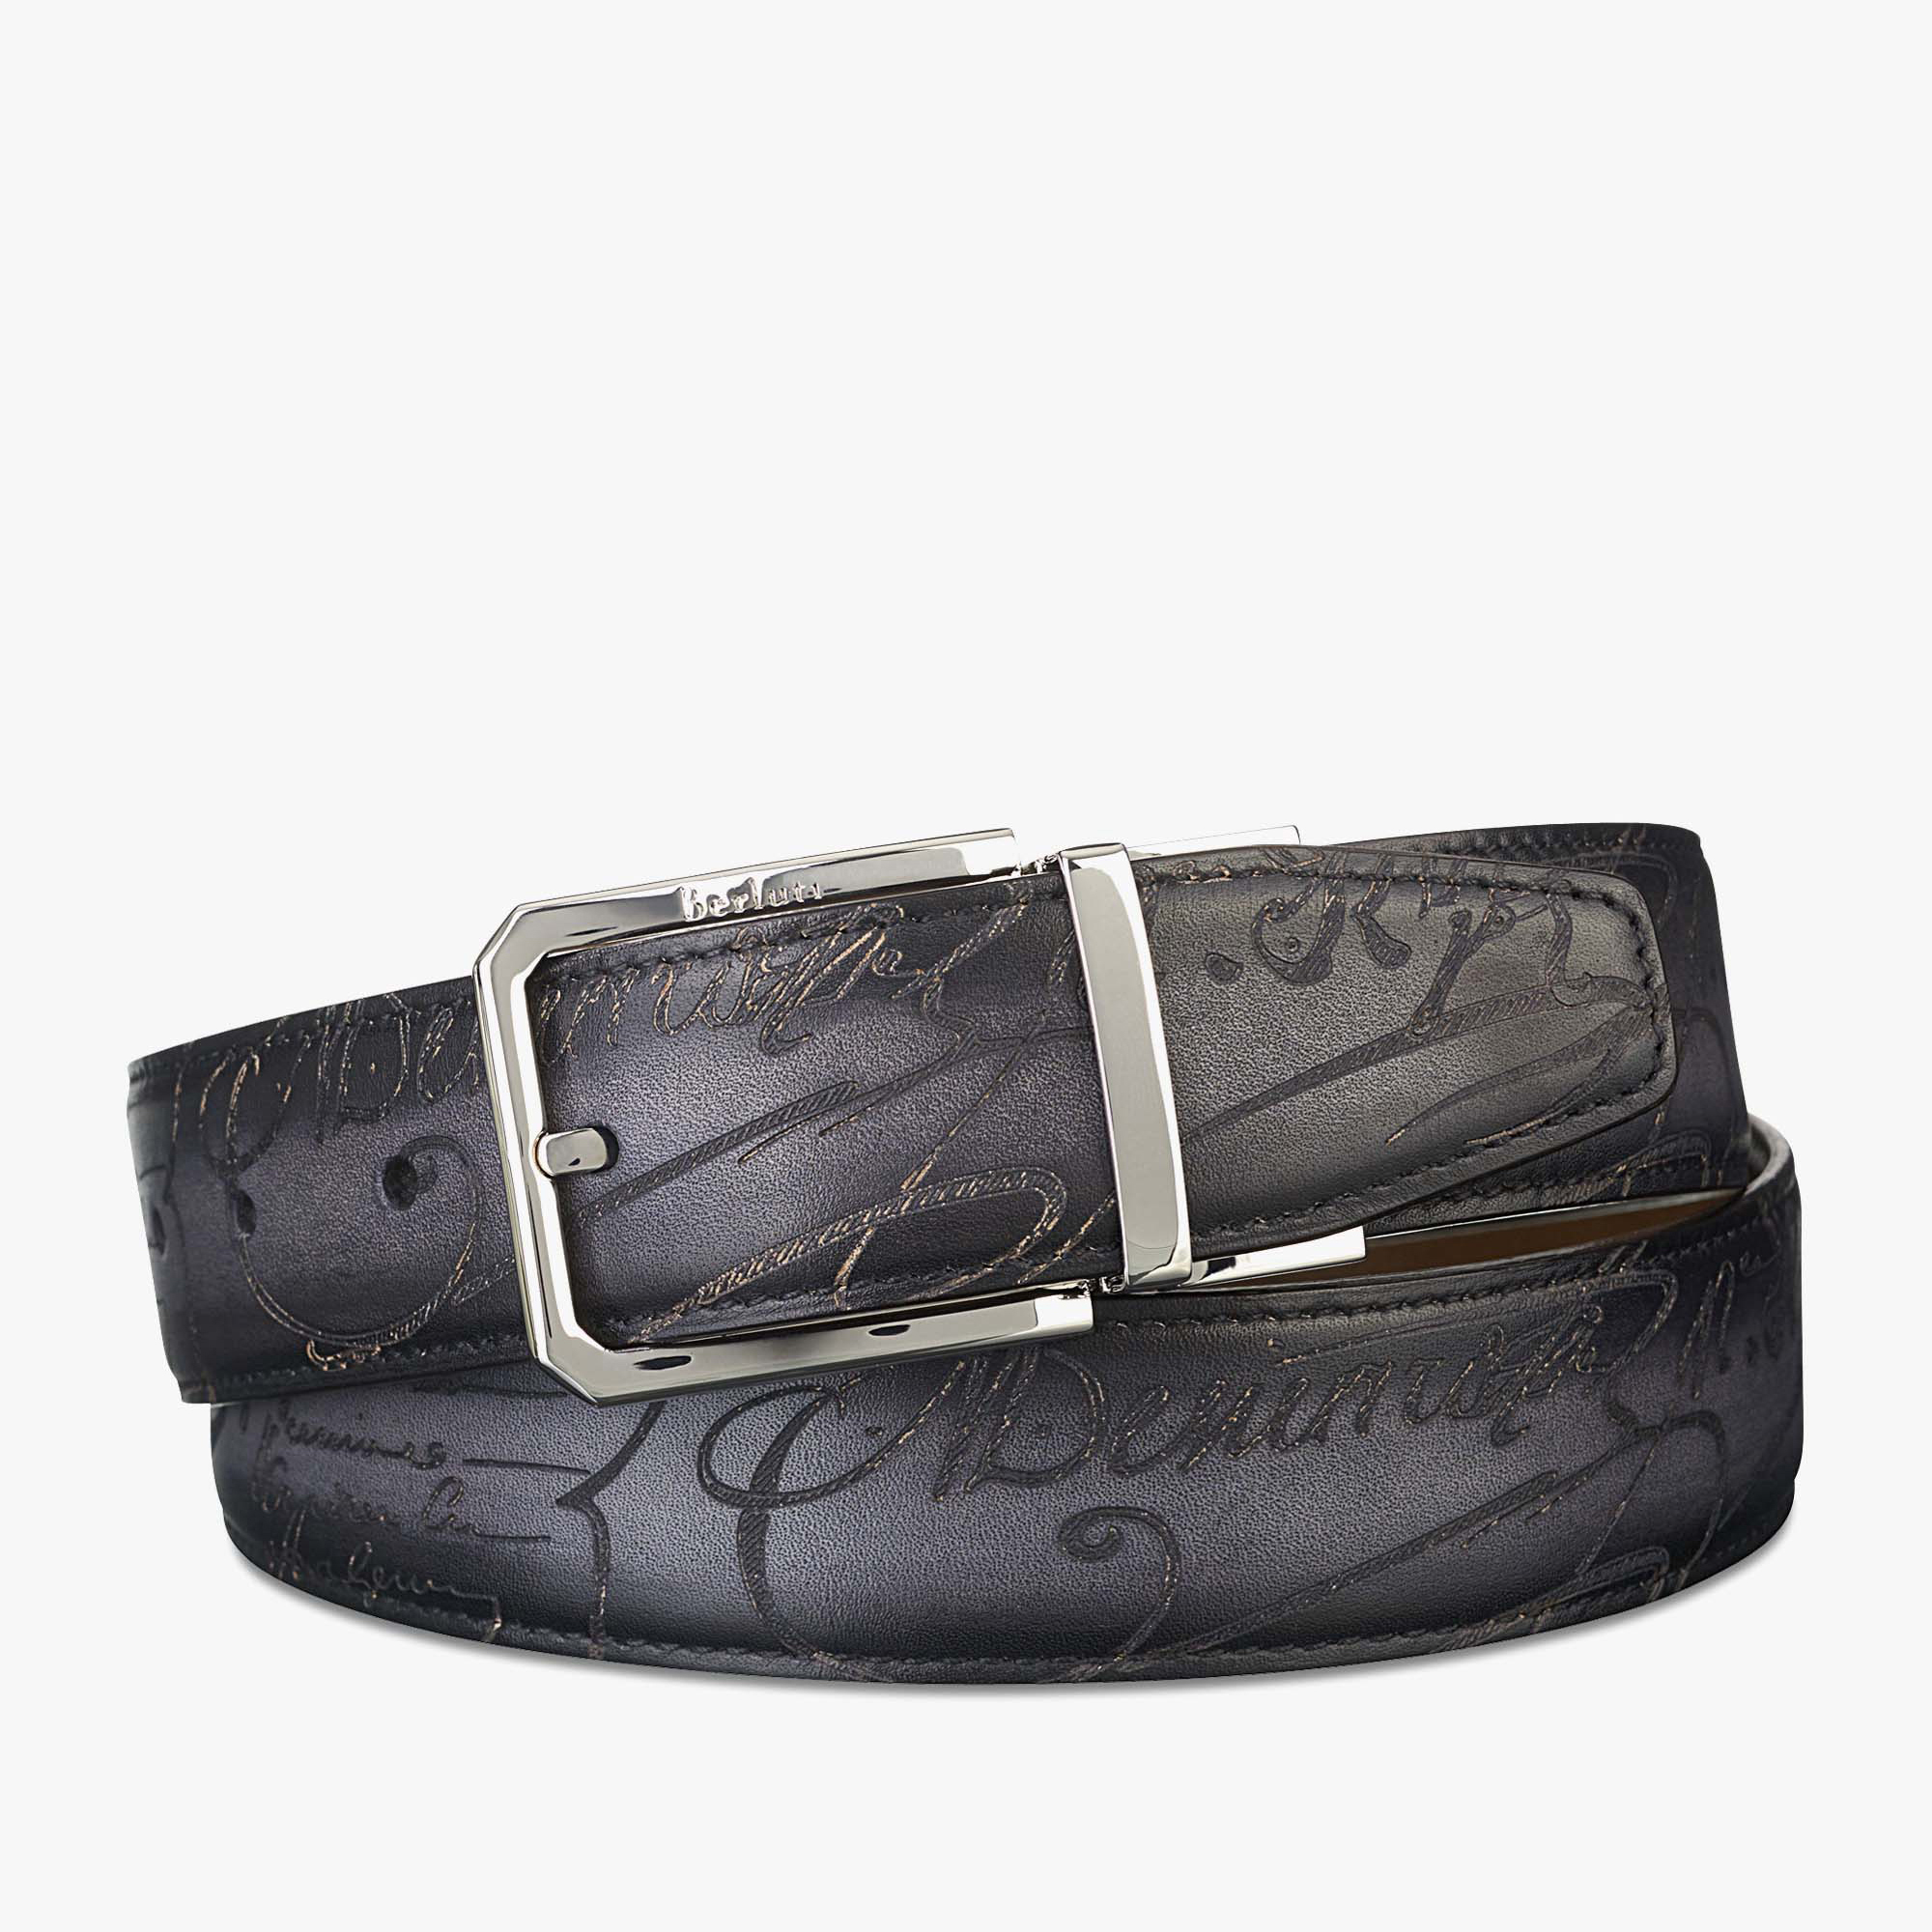 Versatile Reversible Scritto Leather Belt - 35 mm, TOBACCO BIS & NERO, hi-res